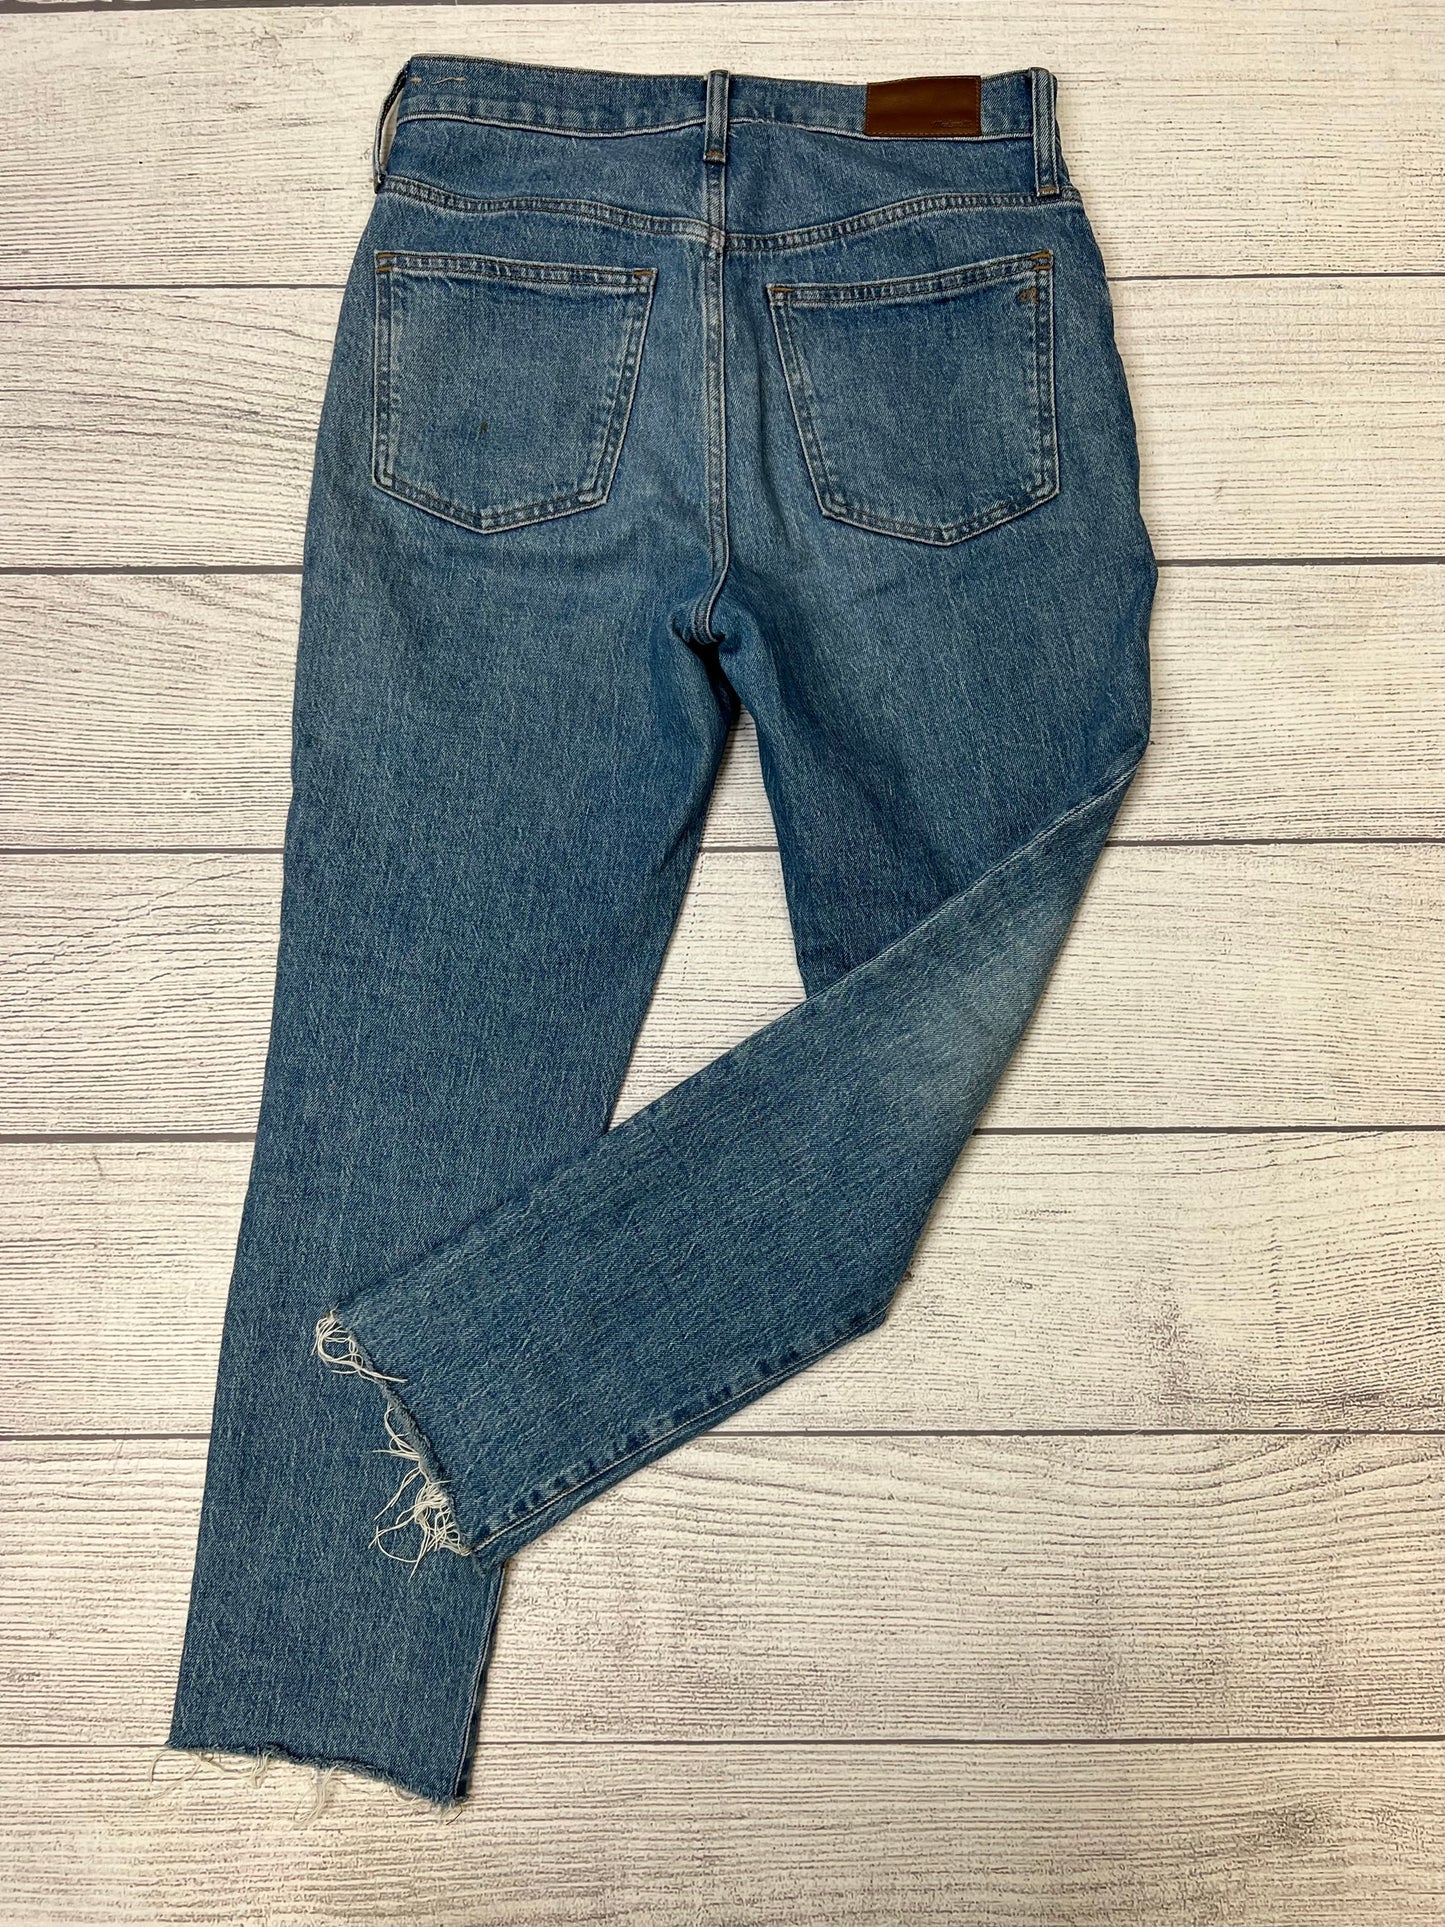 Denim Jeans Designer Madewell, Size 4